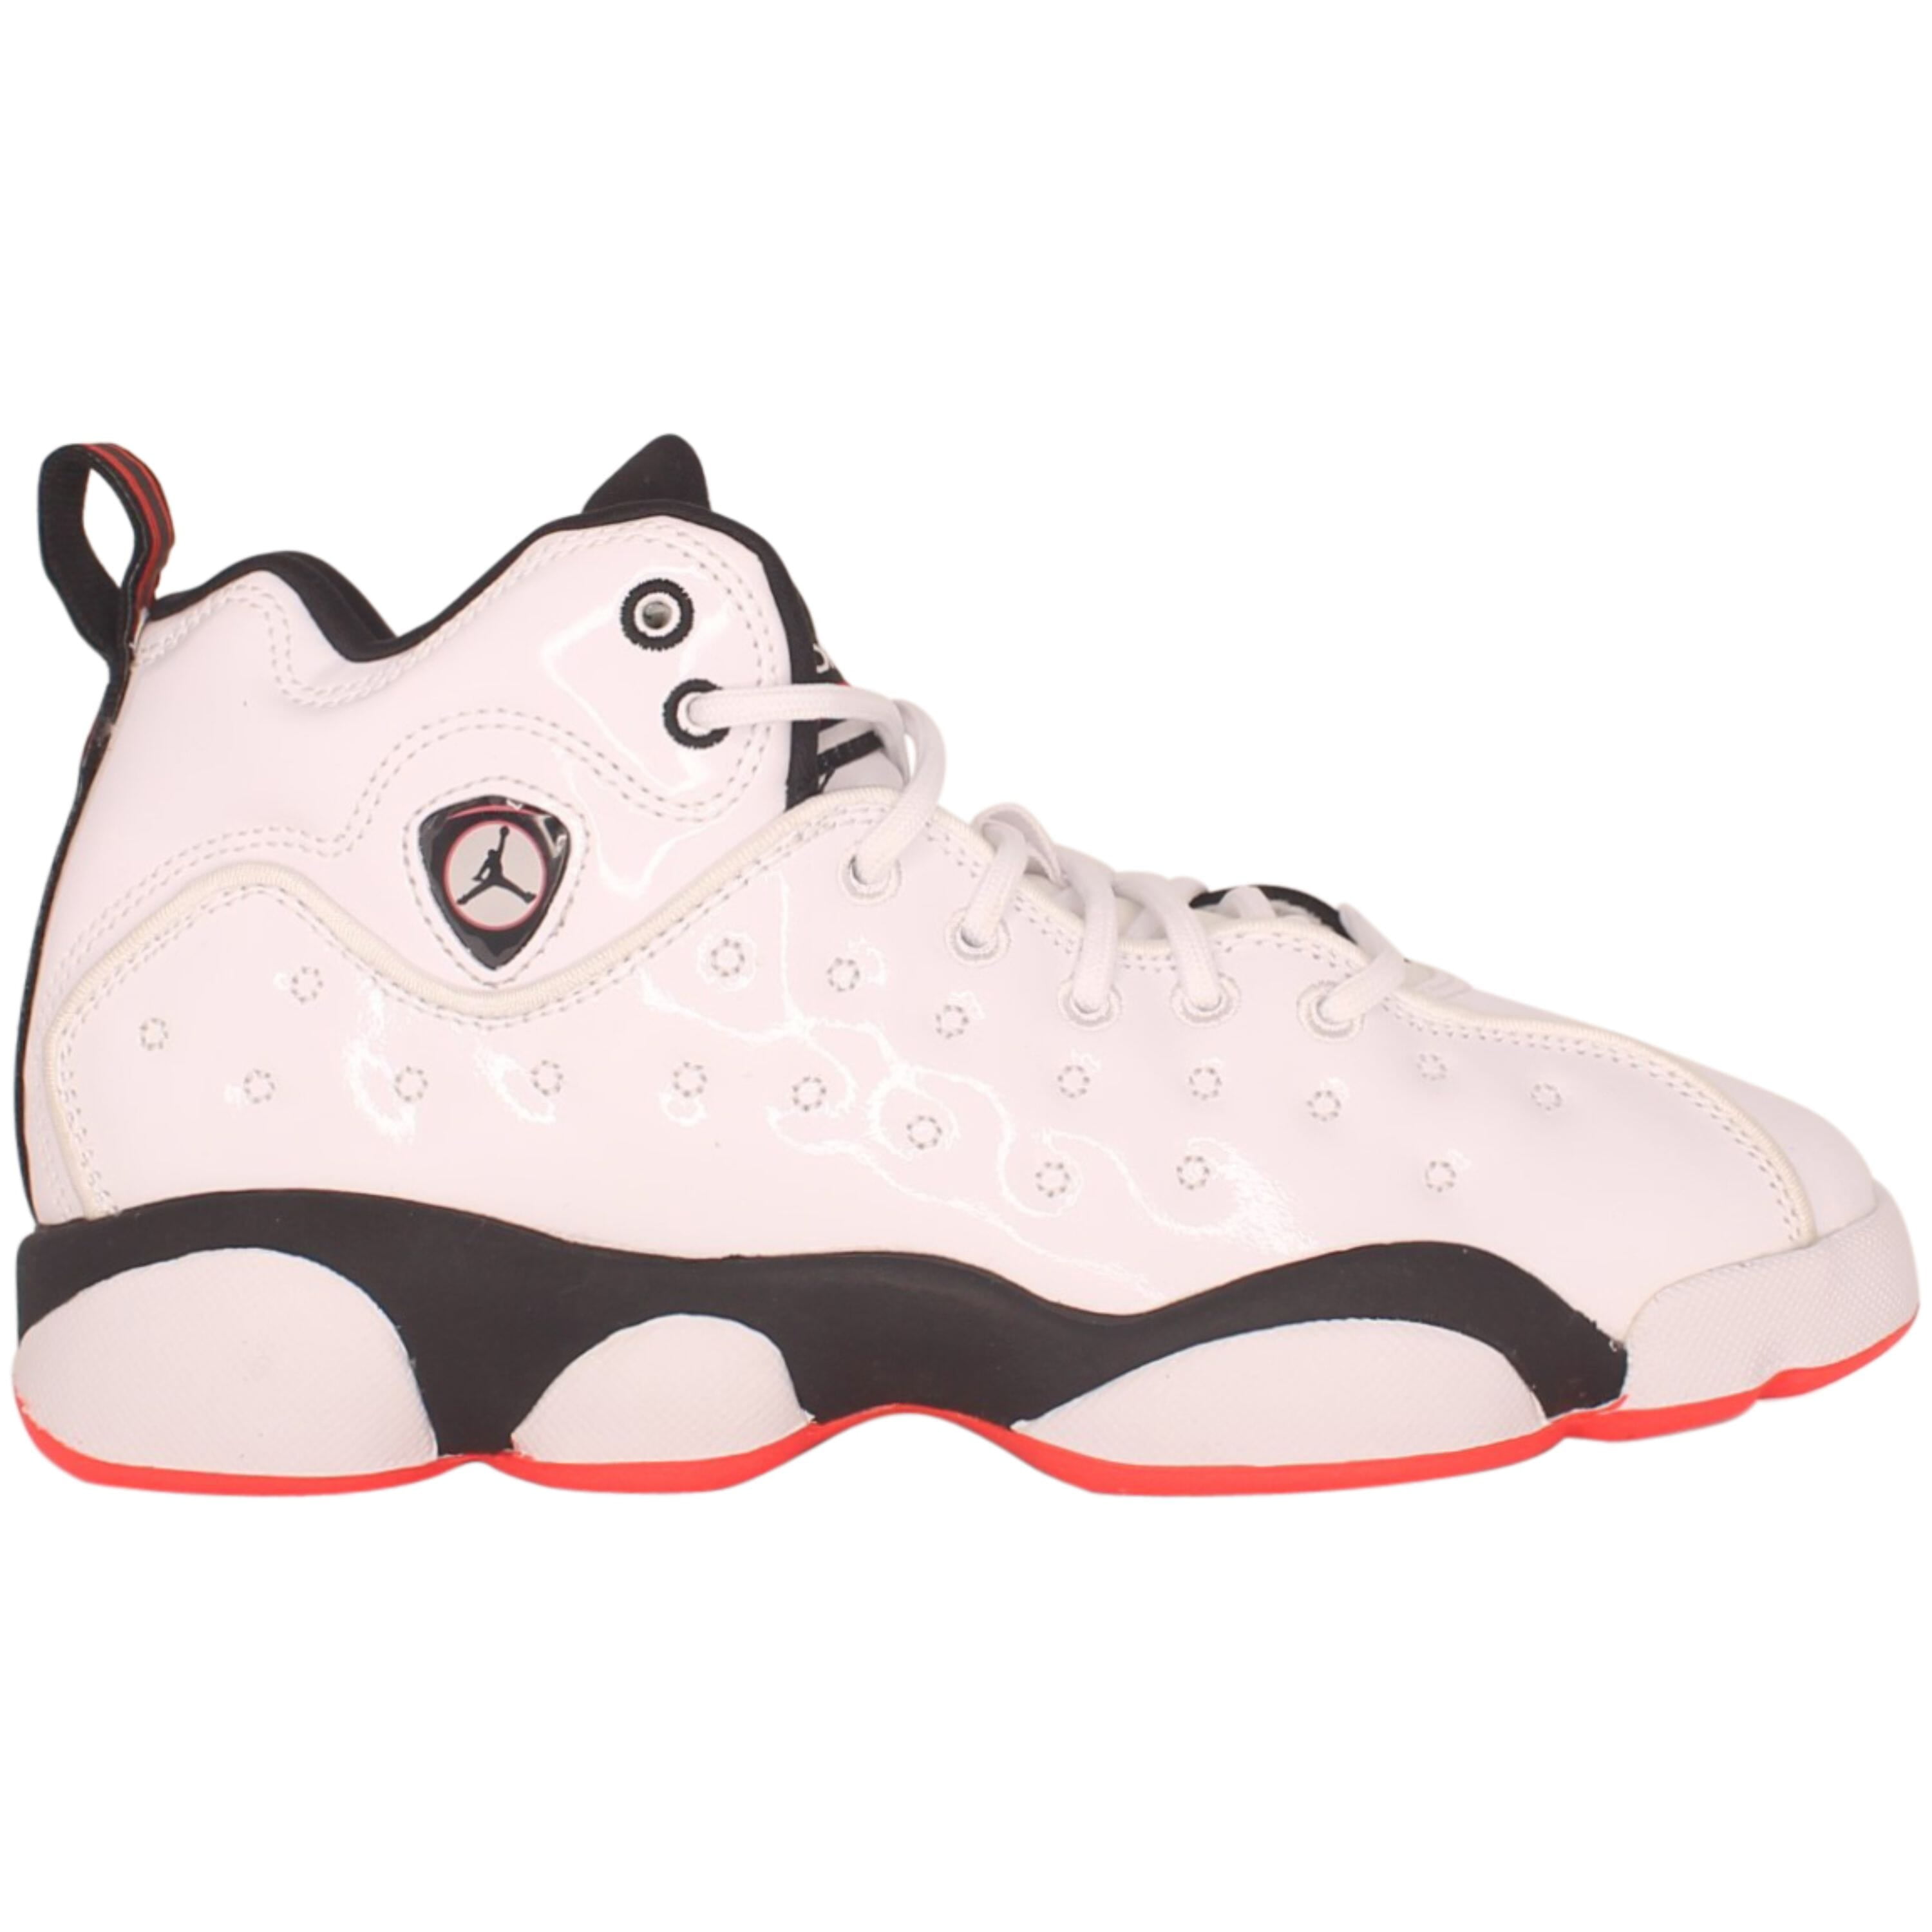 Nike Jordan Jumpman White/Black 23 820273-106 Grade-School Size 6Y - Walmart.com